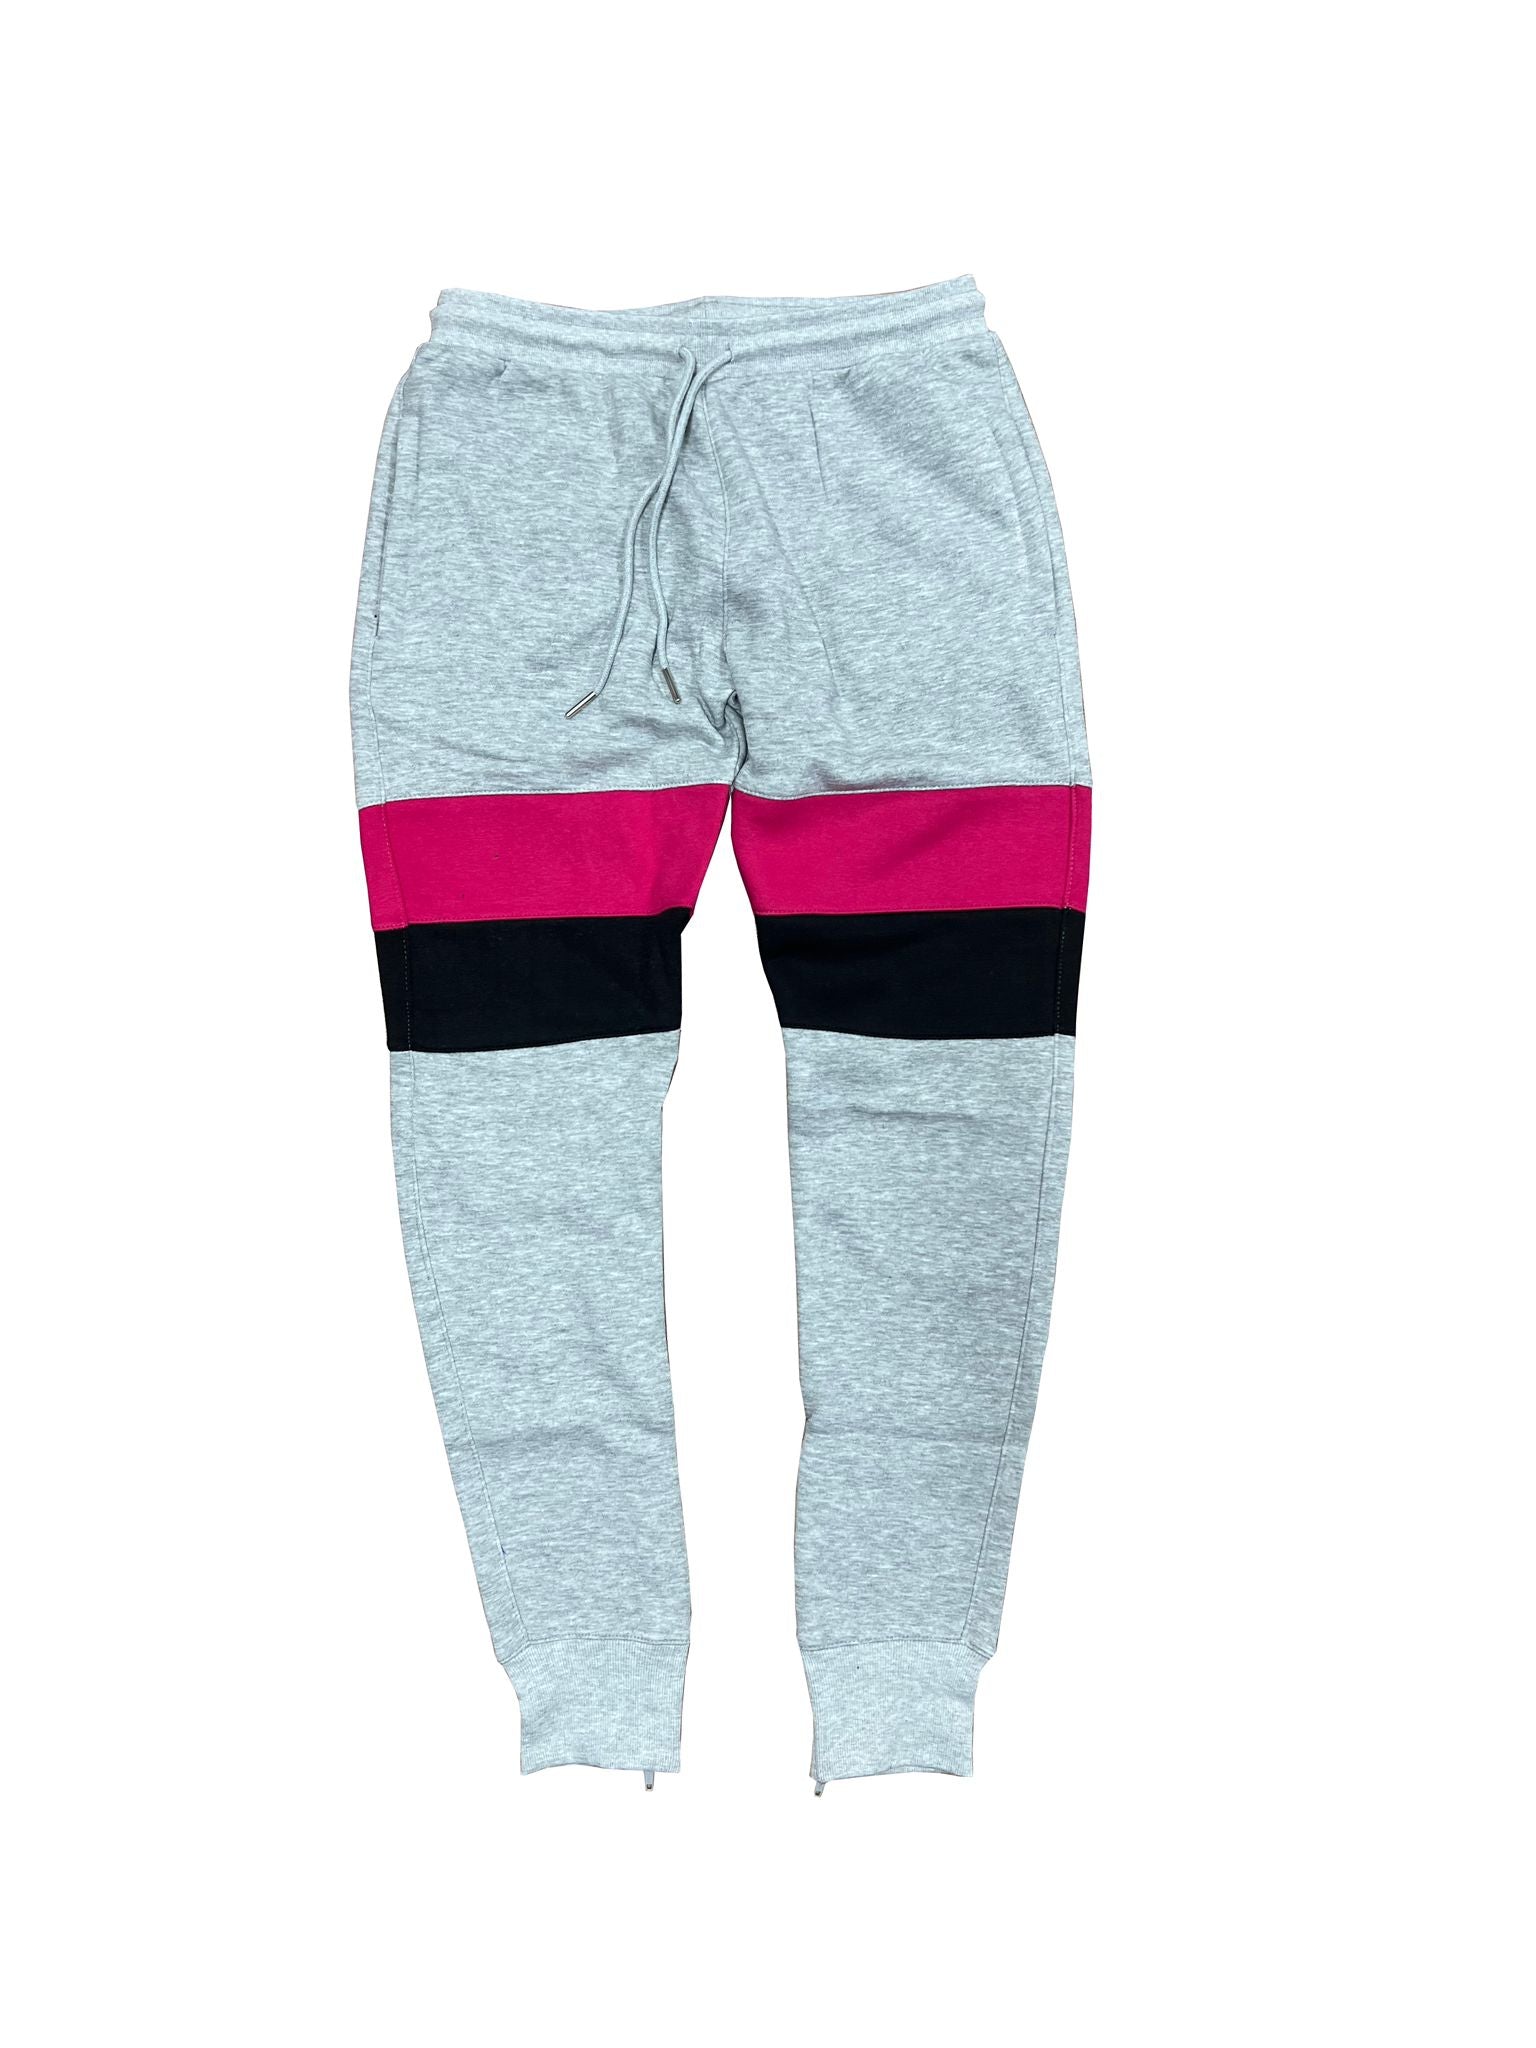 Dipset Couture Grey/Pink/Black Sweatsuit